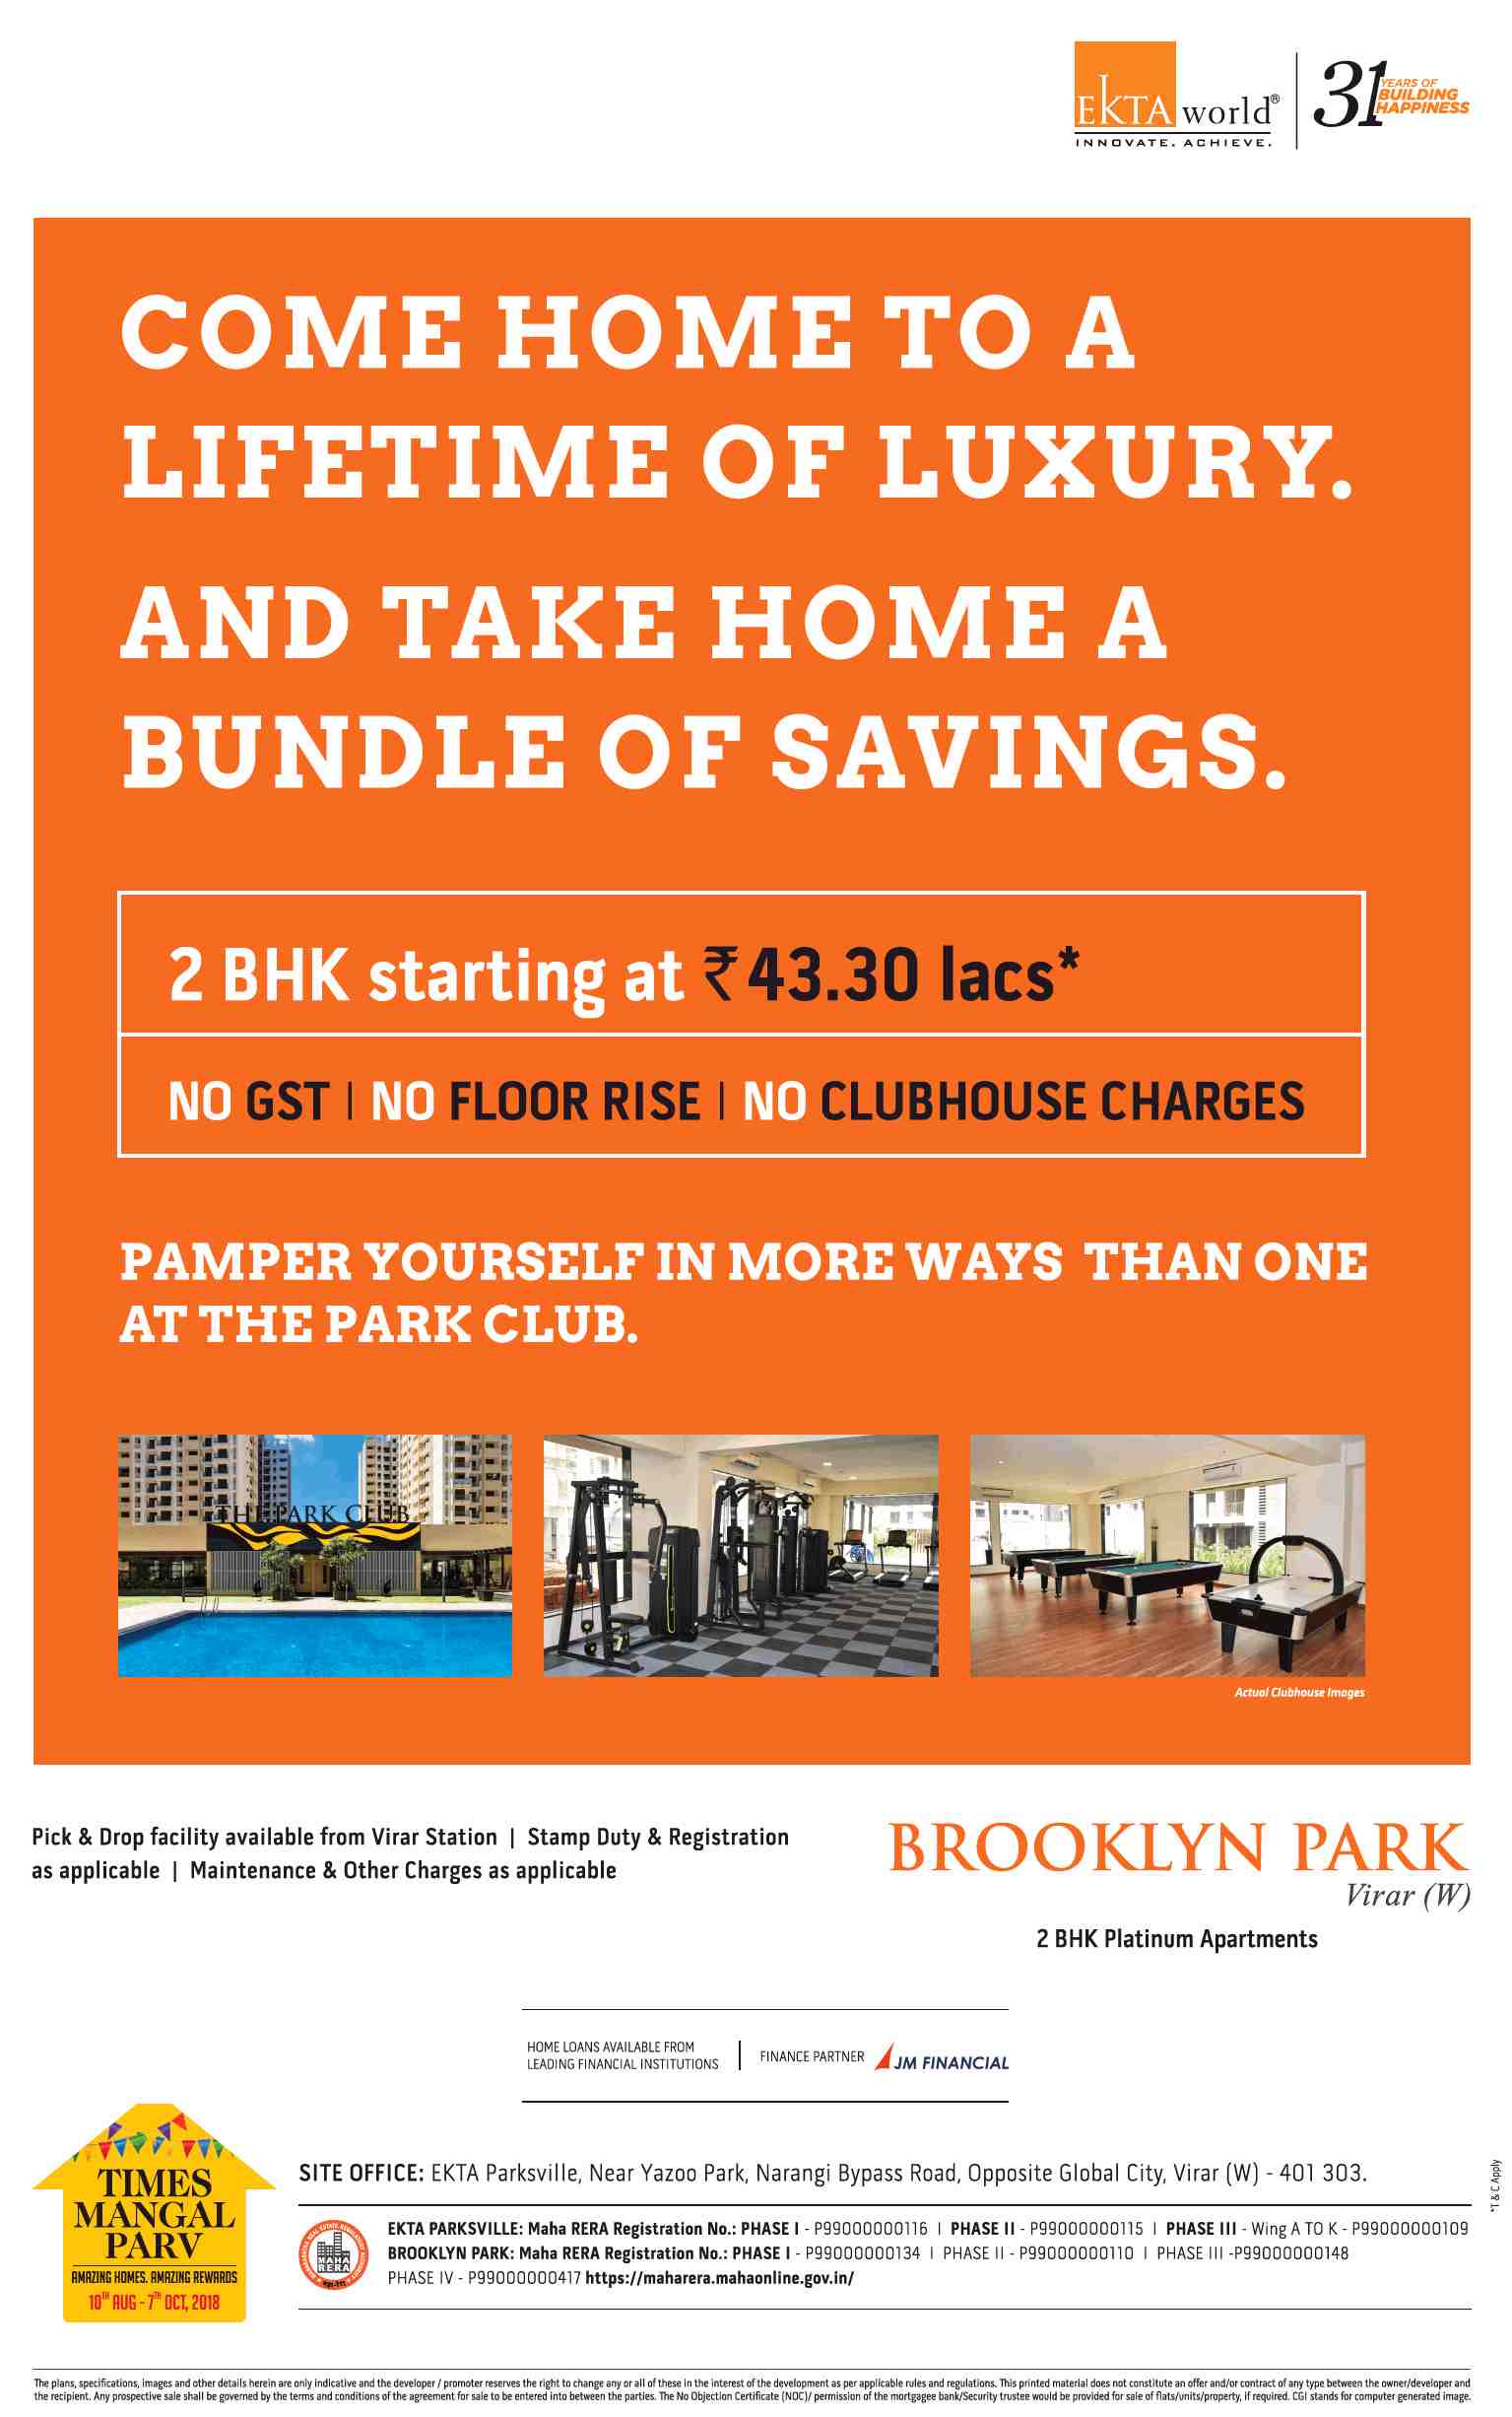 Book 2 BHK platinum apartments @ Rs. 43.30 Lacs at Ekta Brooklyn Park in Mumbai Update